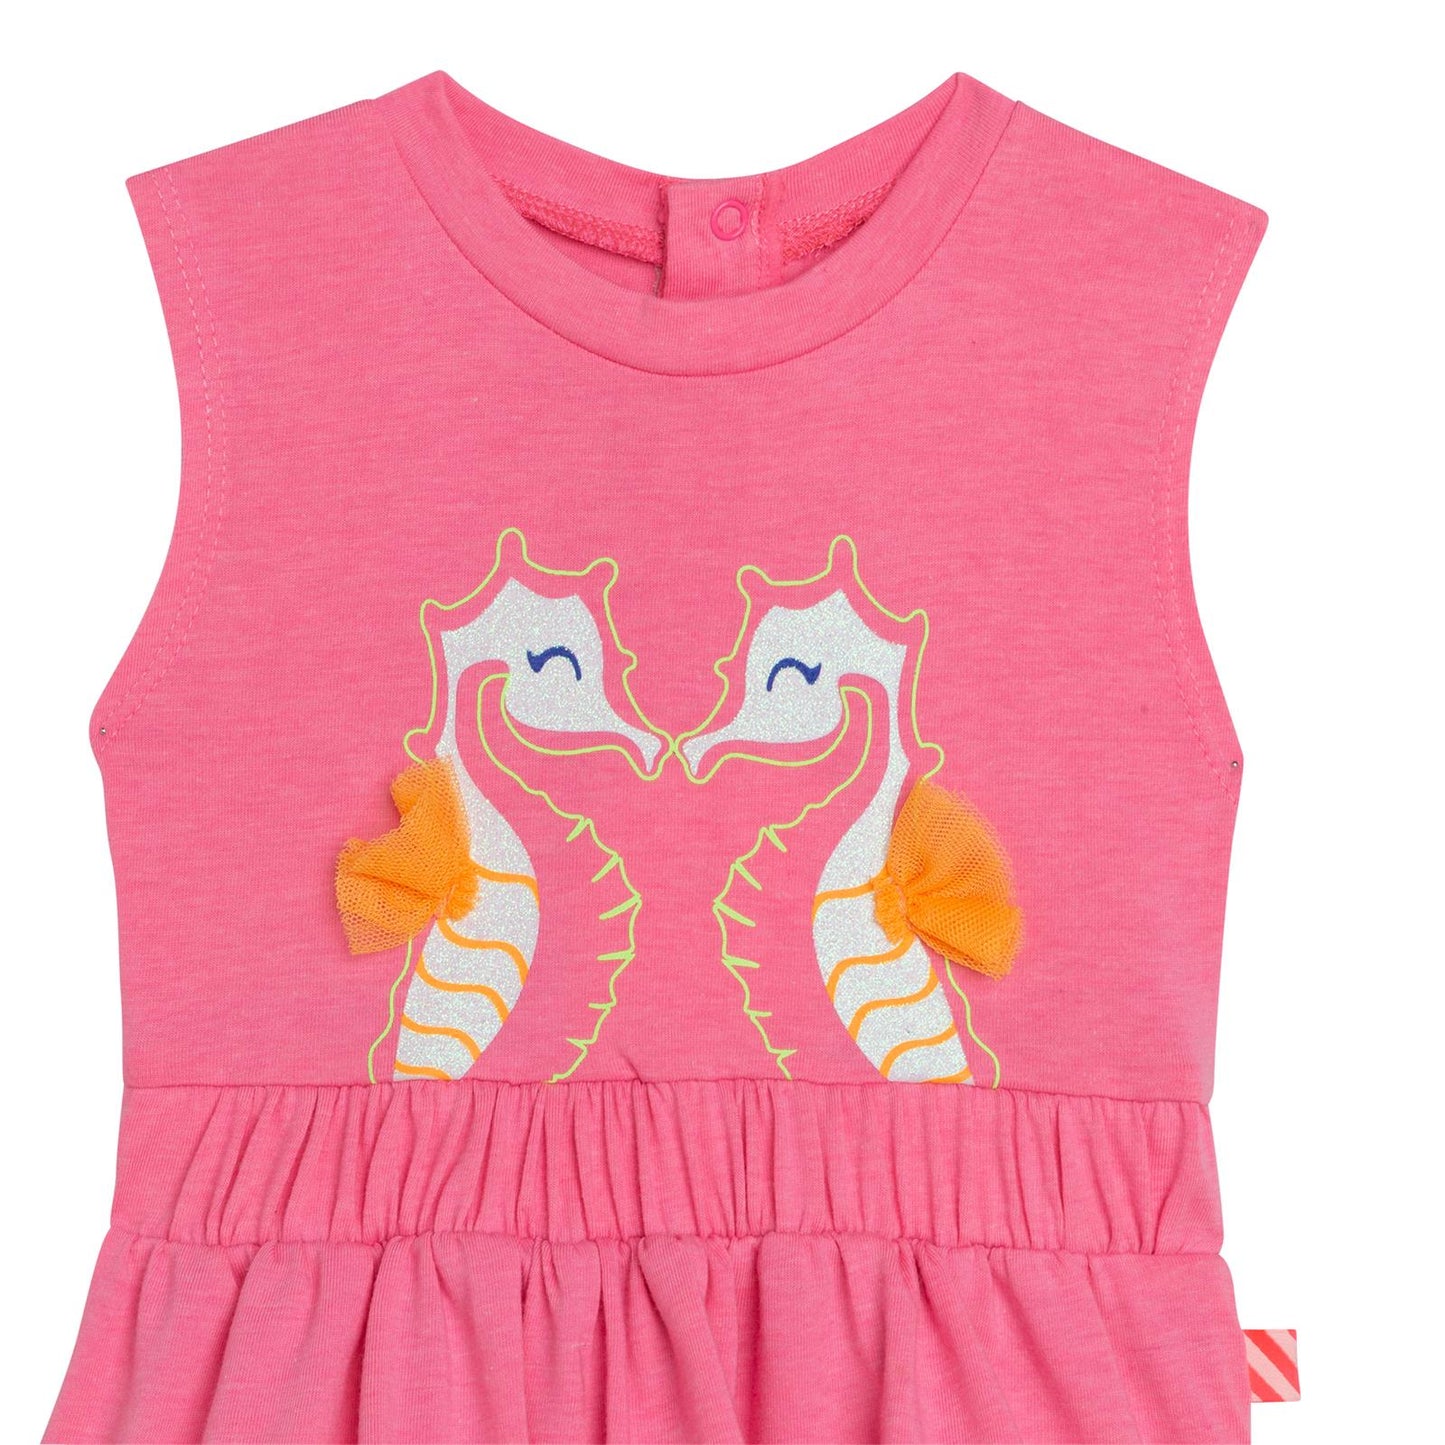 Pink Seahorse Dress